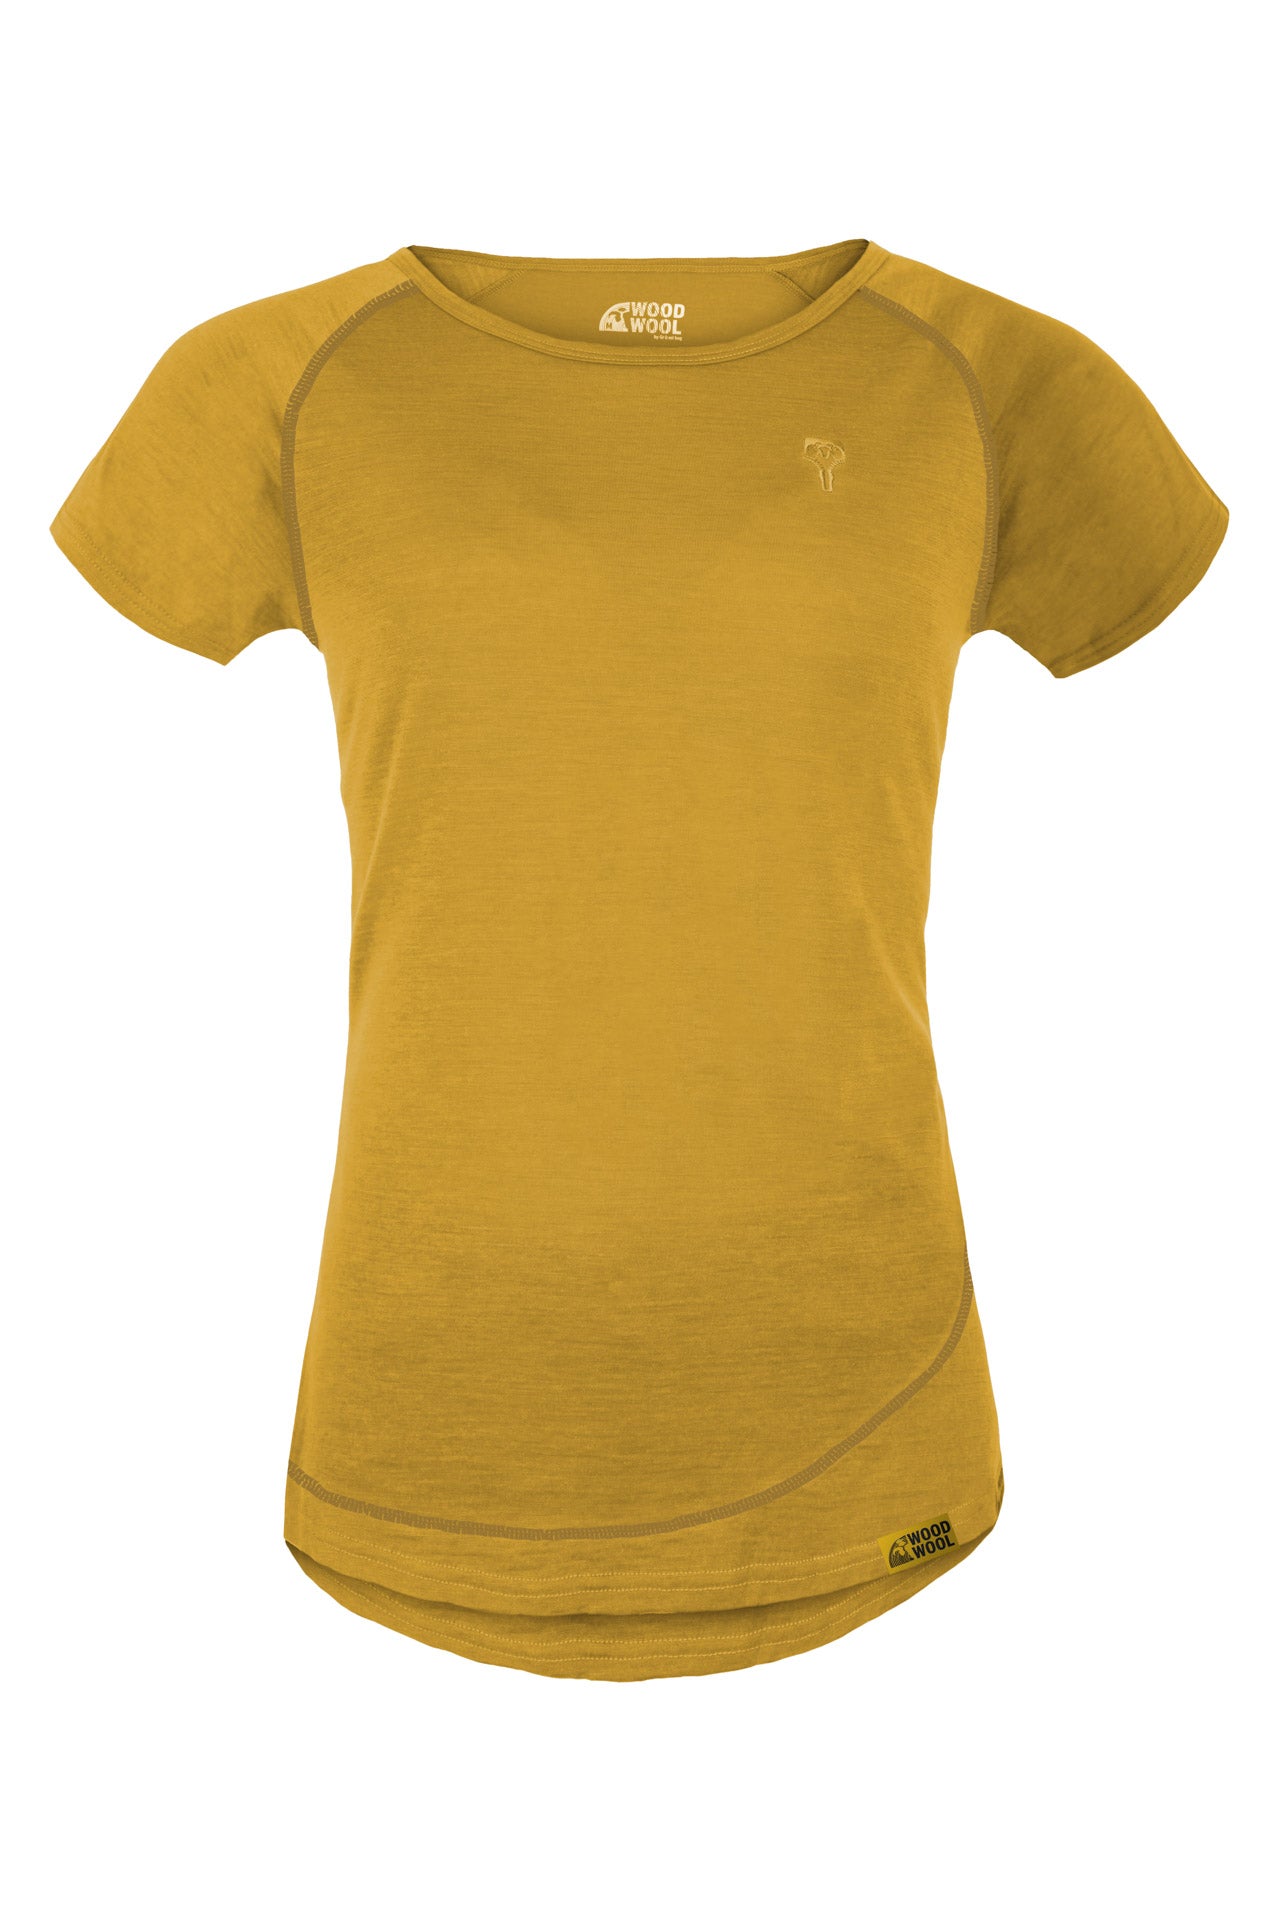 WoodWool T-Shirt Lady Burnham | Daisy Daze Yellow